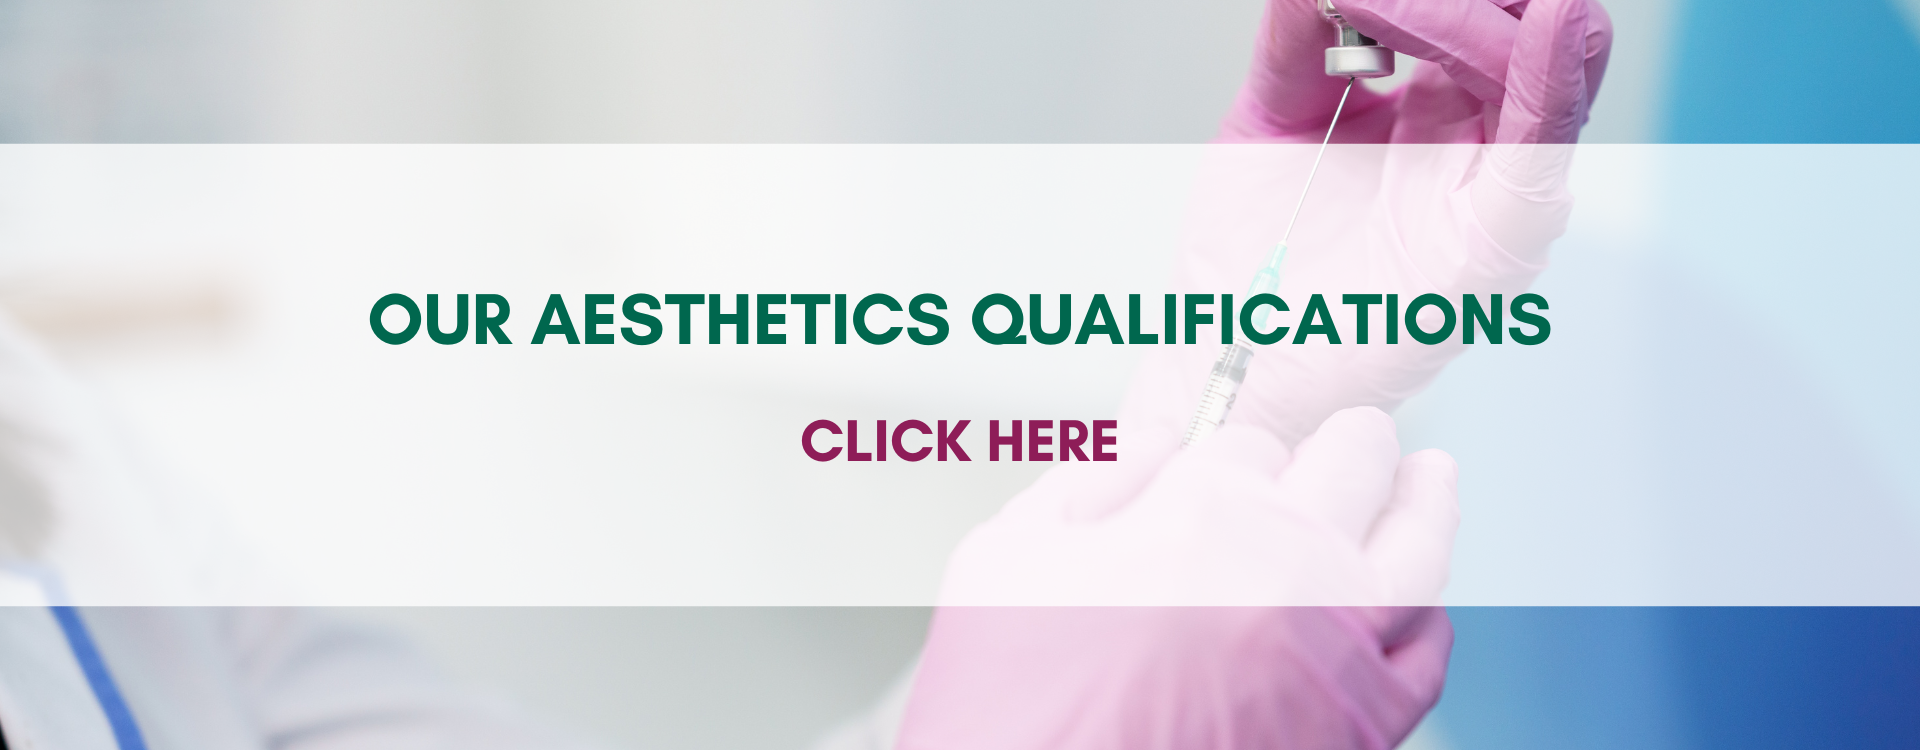 Aesthetics qualifications - Mobile Slide